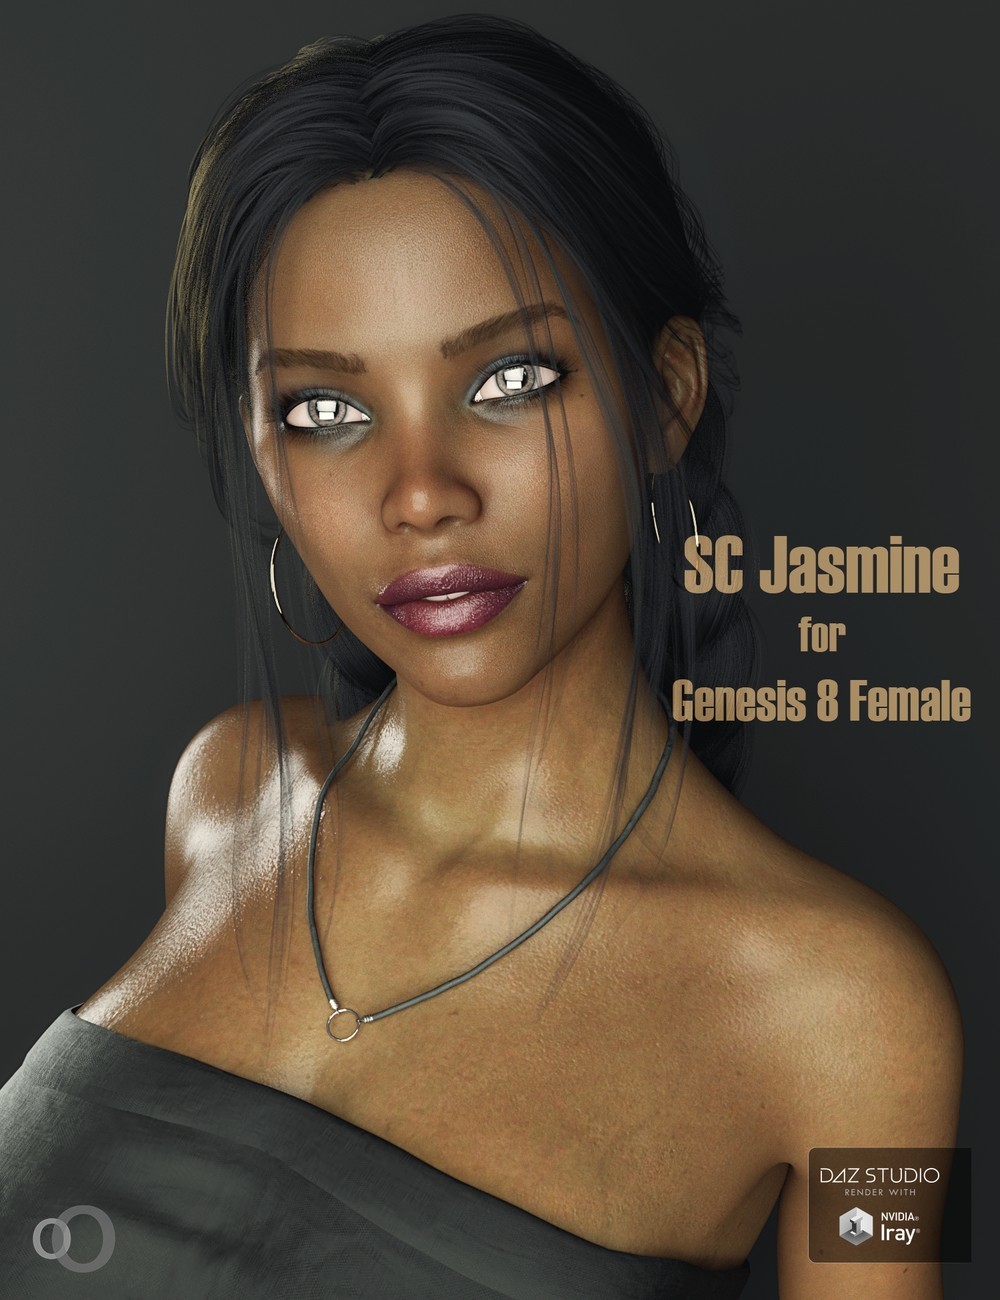 sc-jasmine-for-genesis-8-female